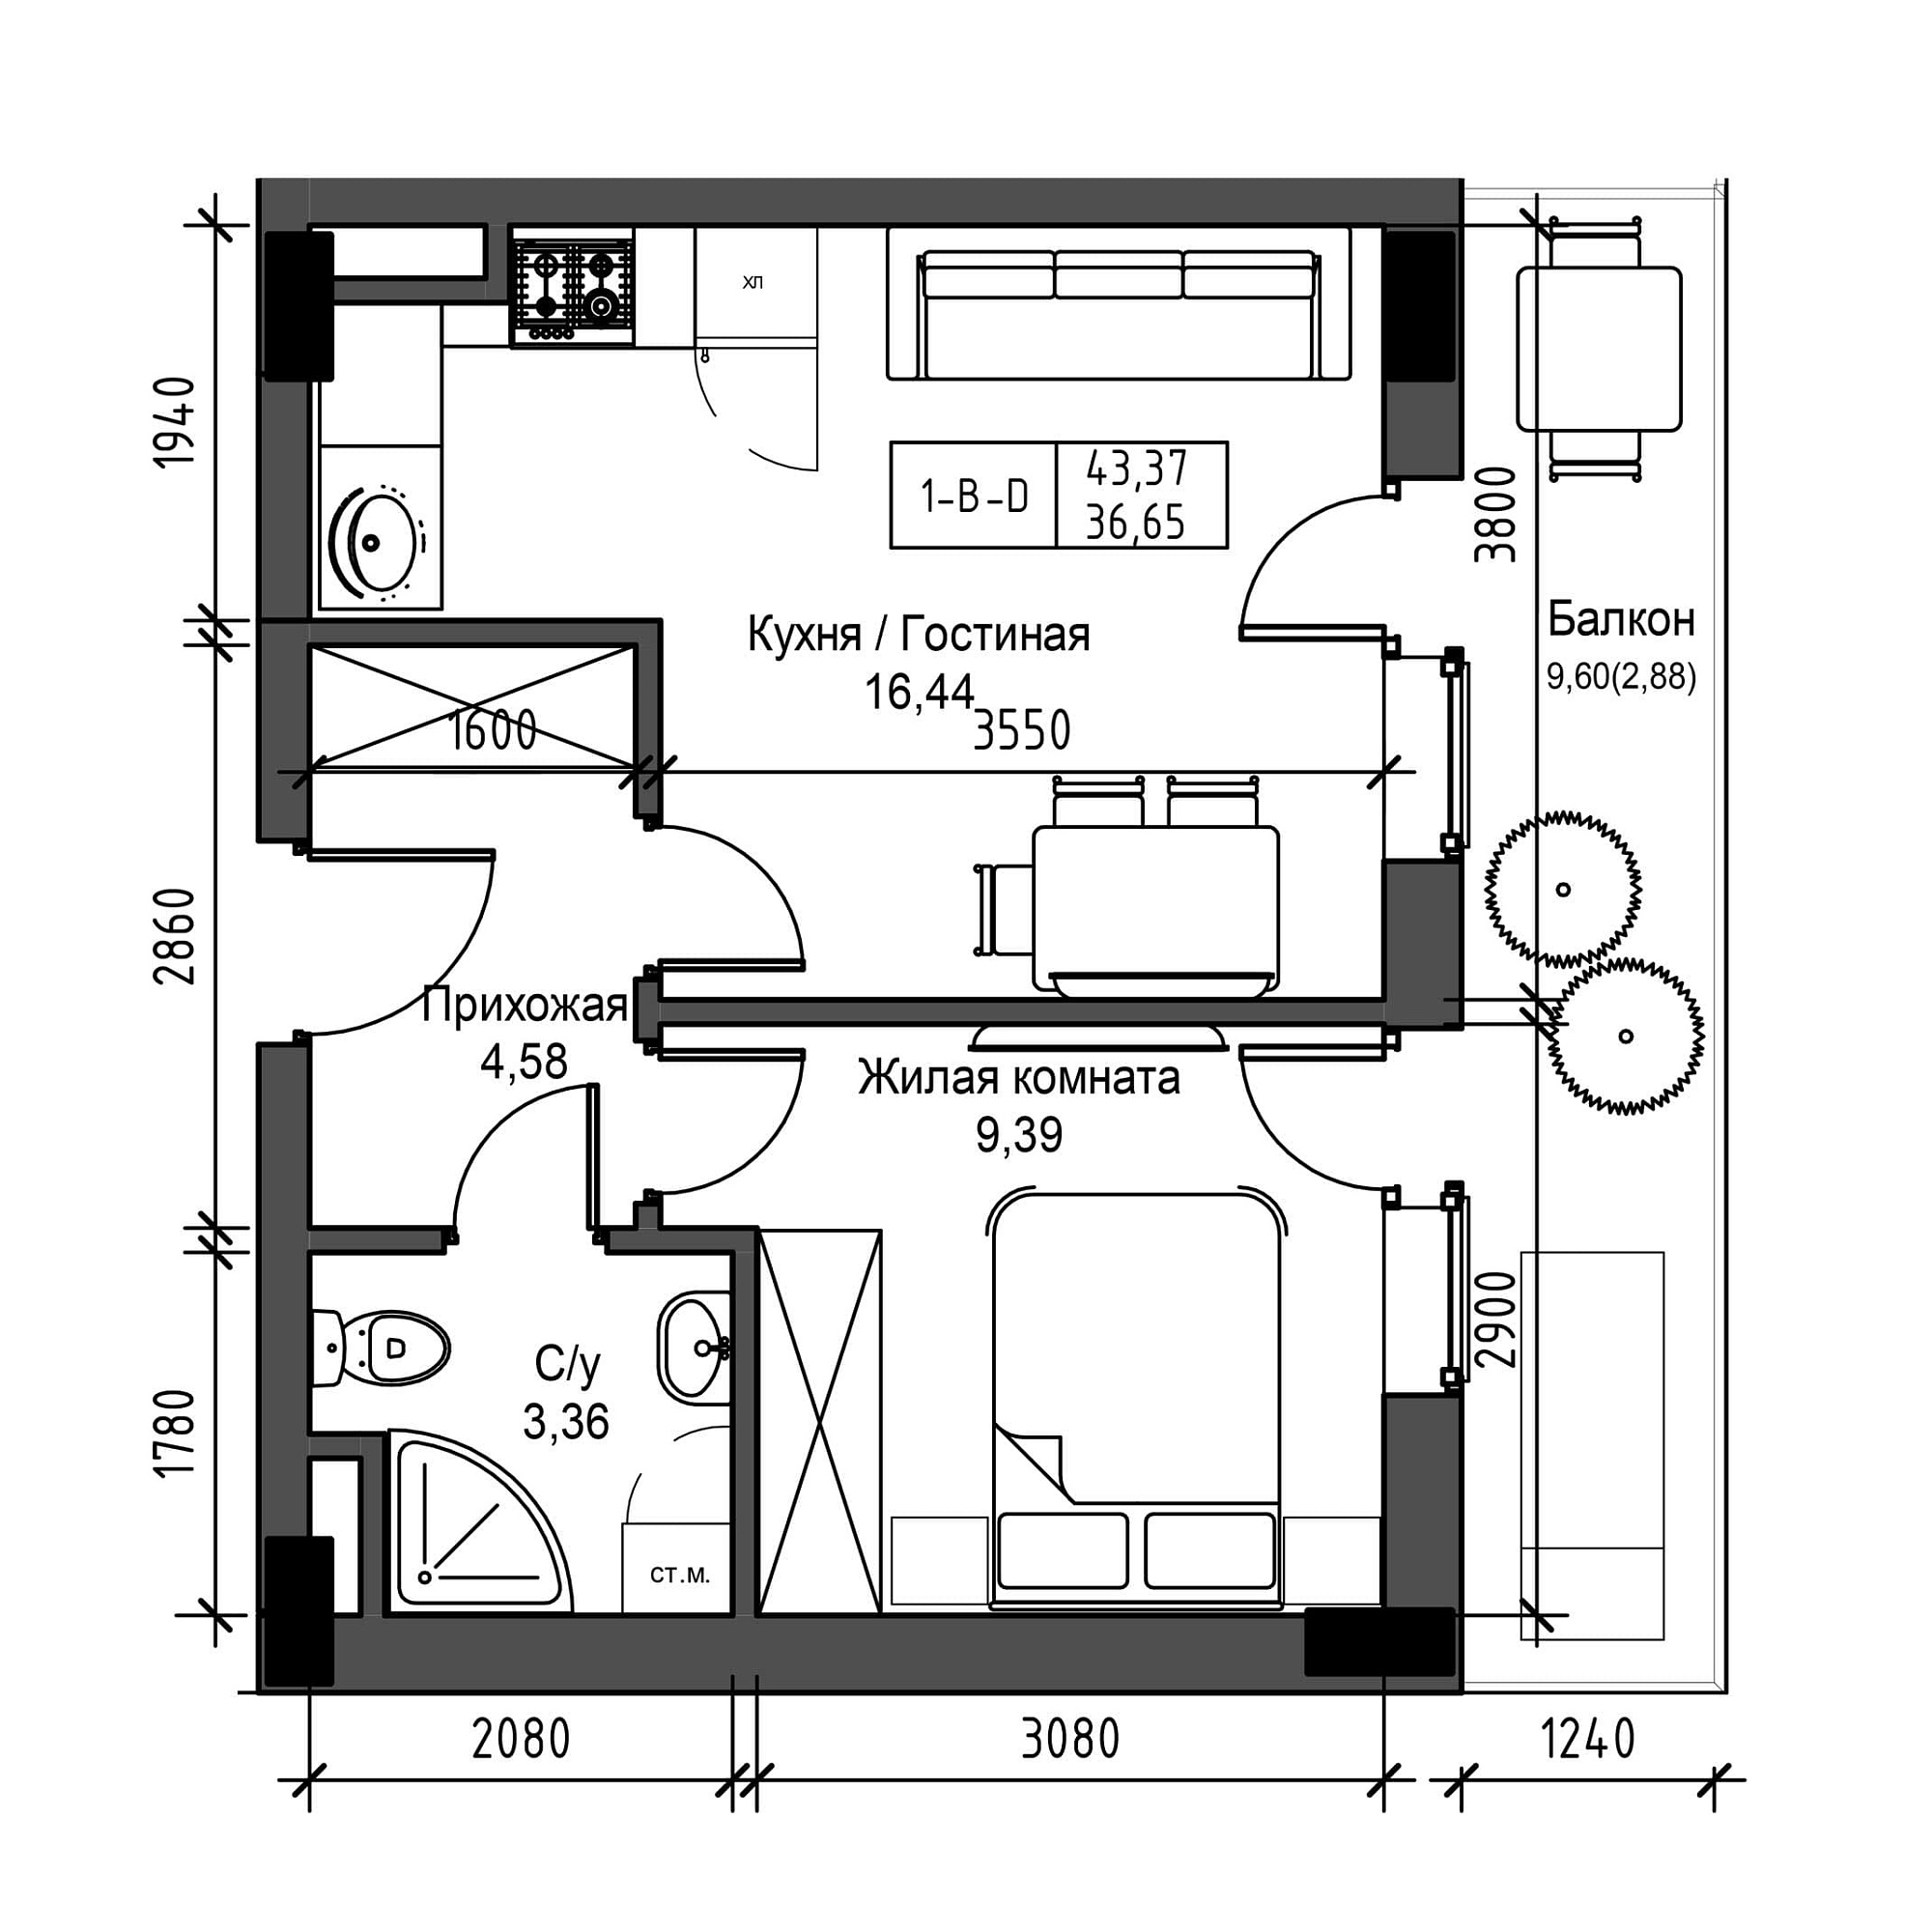 Planning 1-rm flats area 36.65m2, UM-001-05/0002.